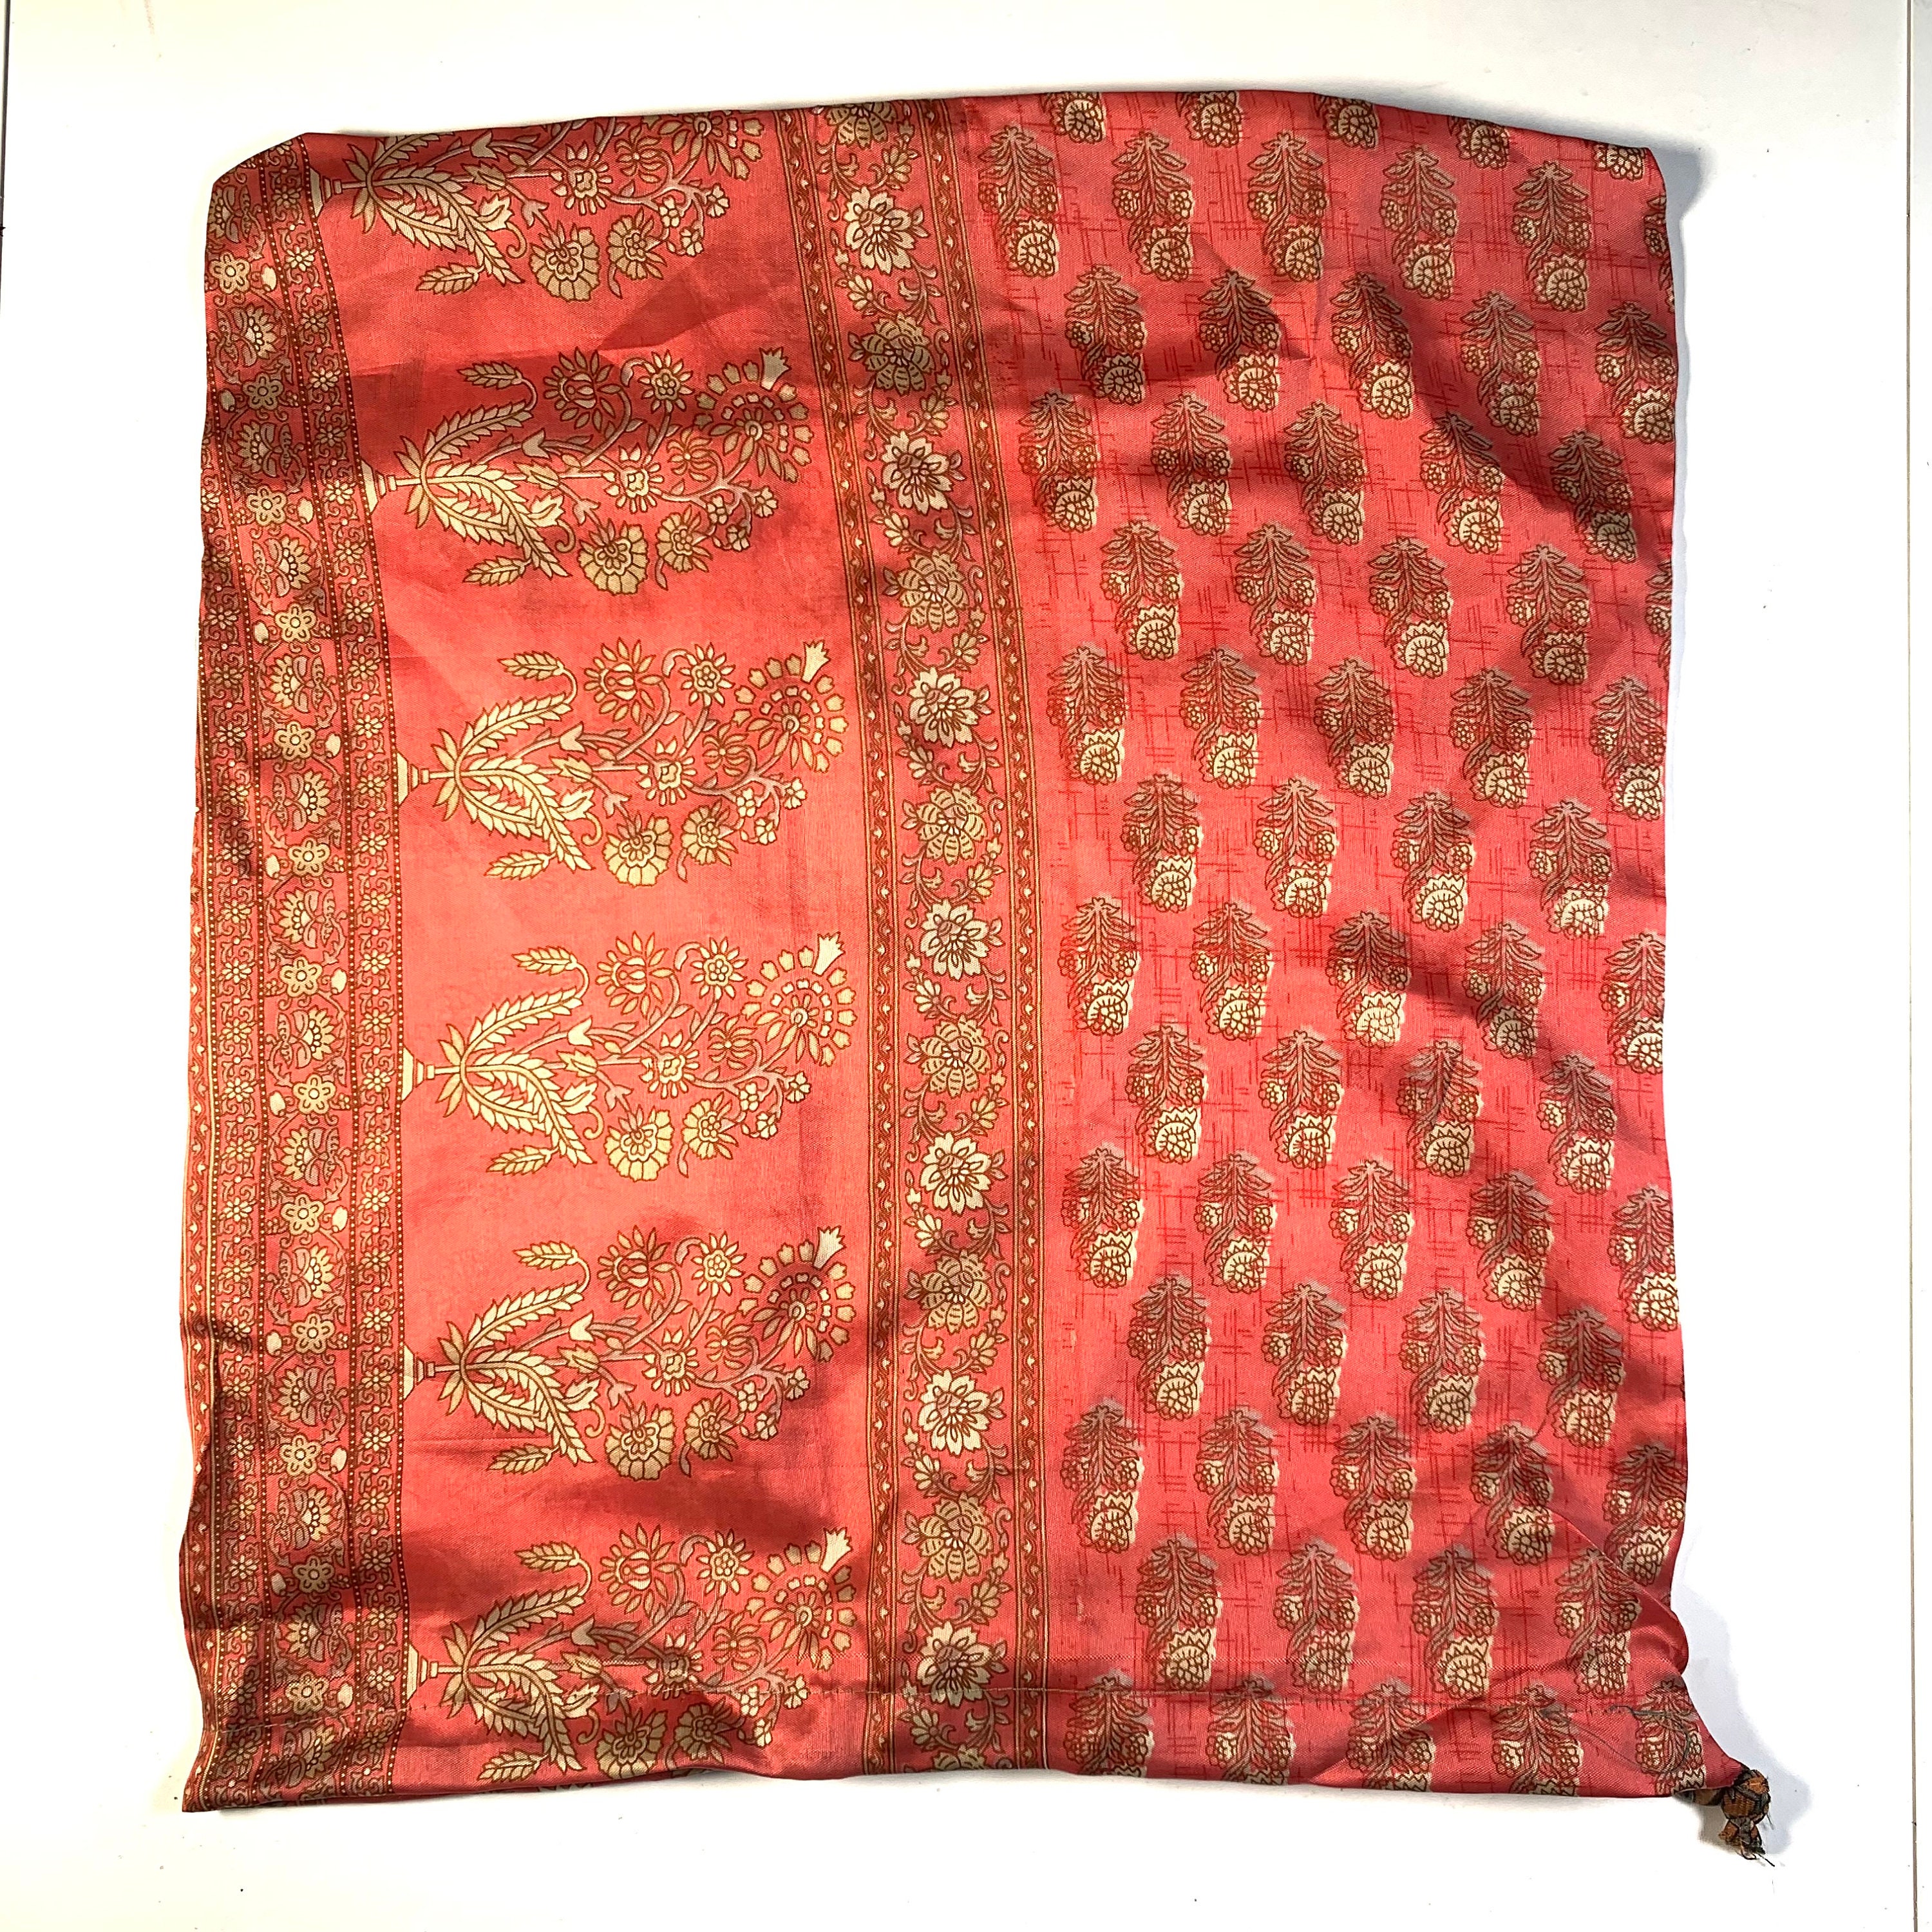 Buy 16x18 Vintage Silk Drawstring Bag. the Perfect Reusable Online